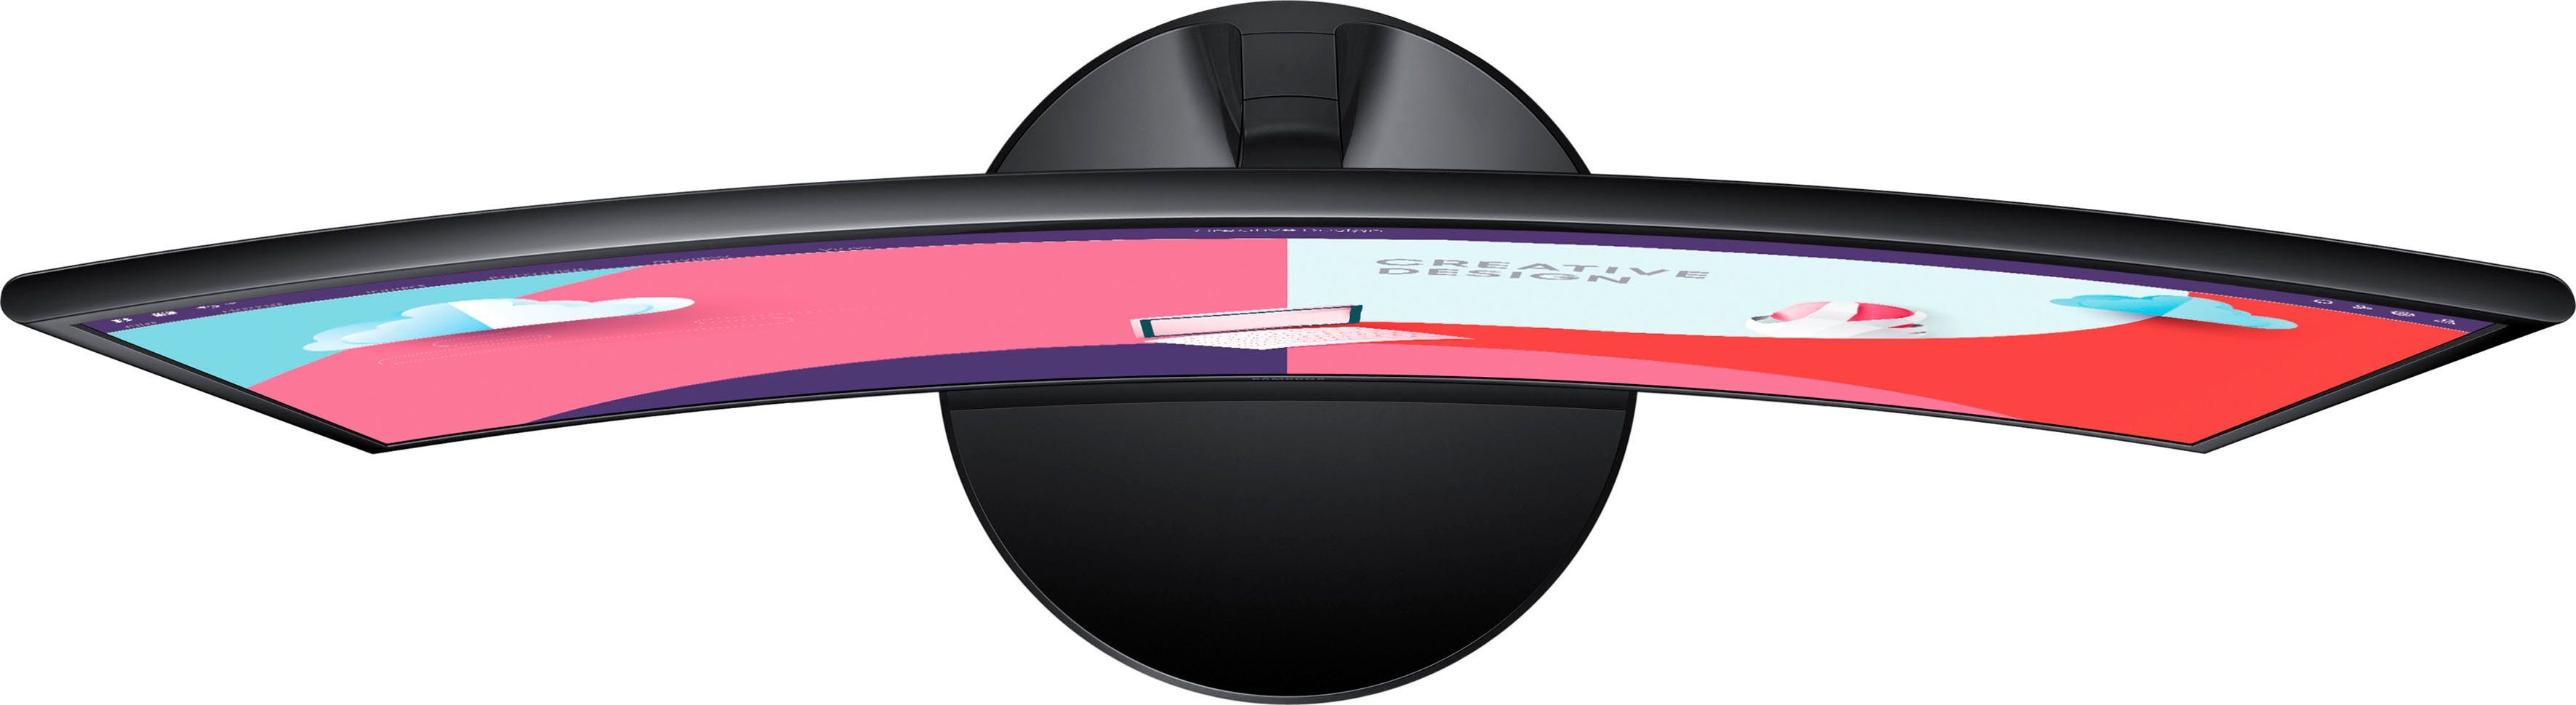 Samsung Curved ledscherm S27C364EAU, OTTO / bestellen 27 online | cm \